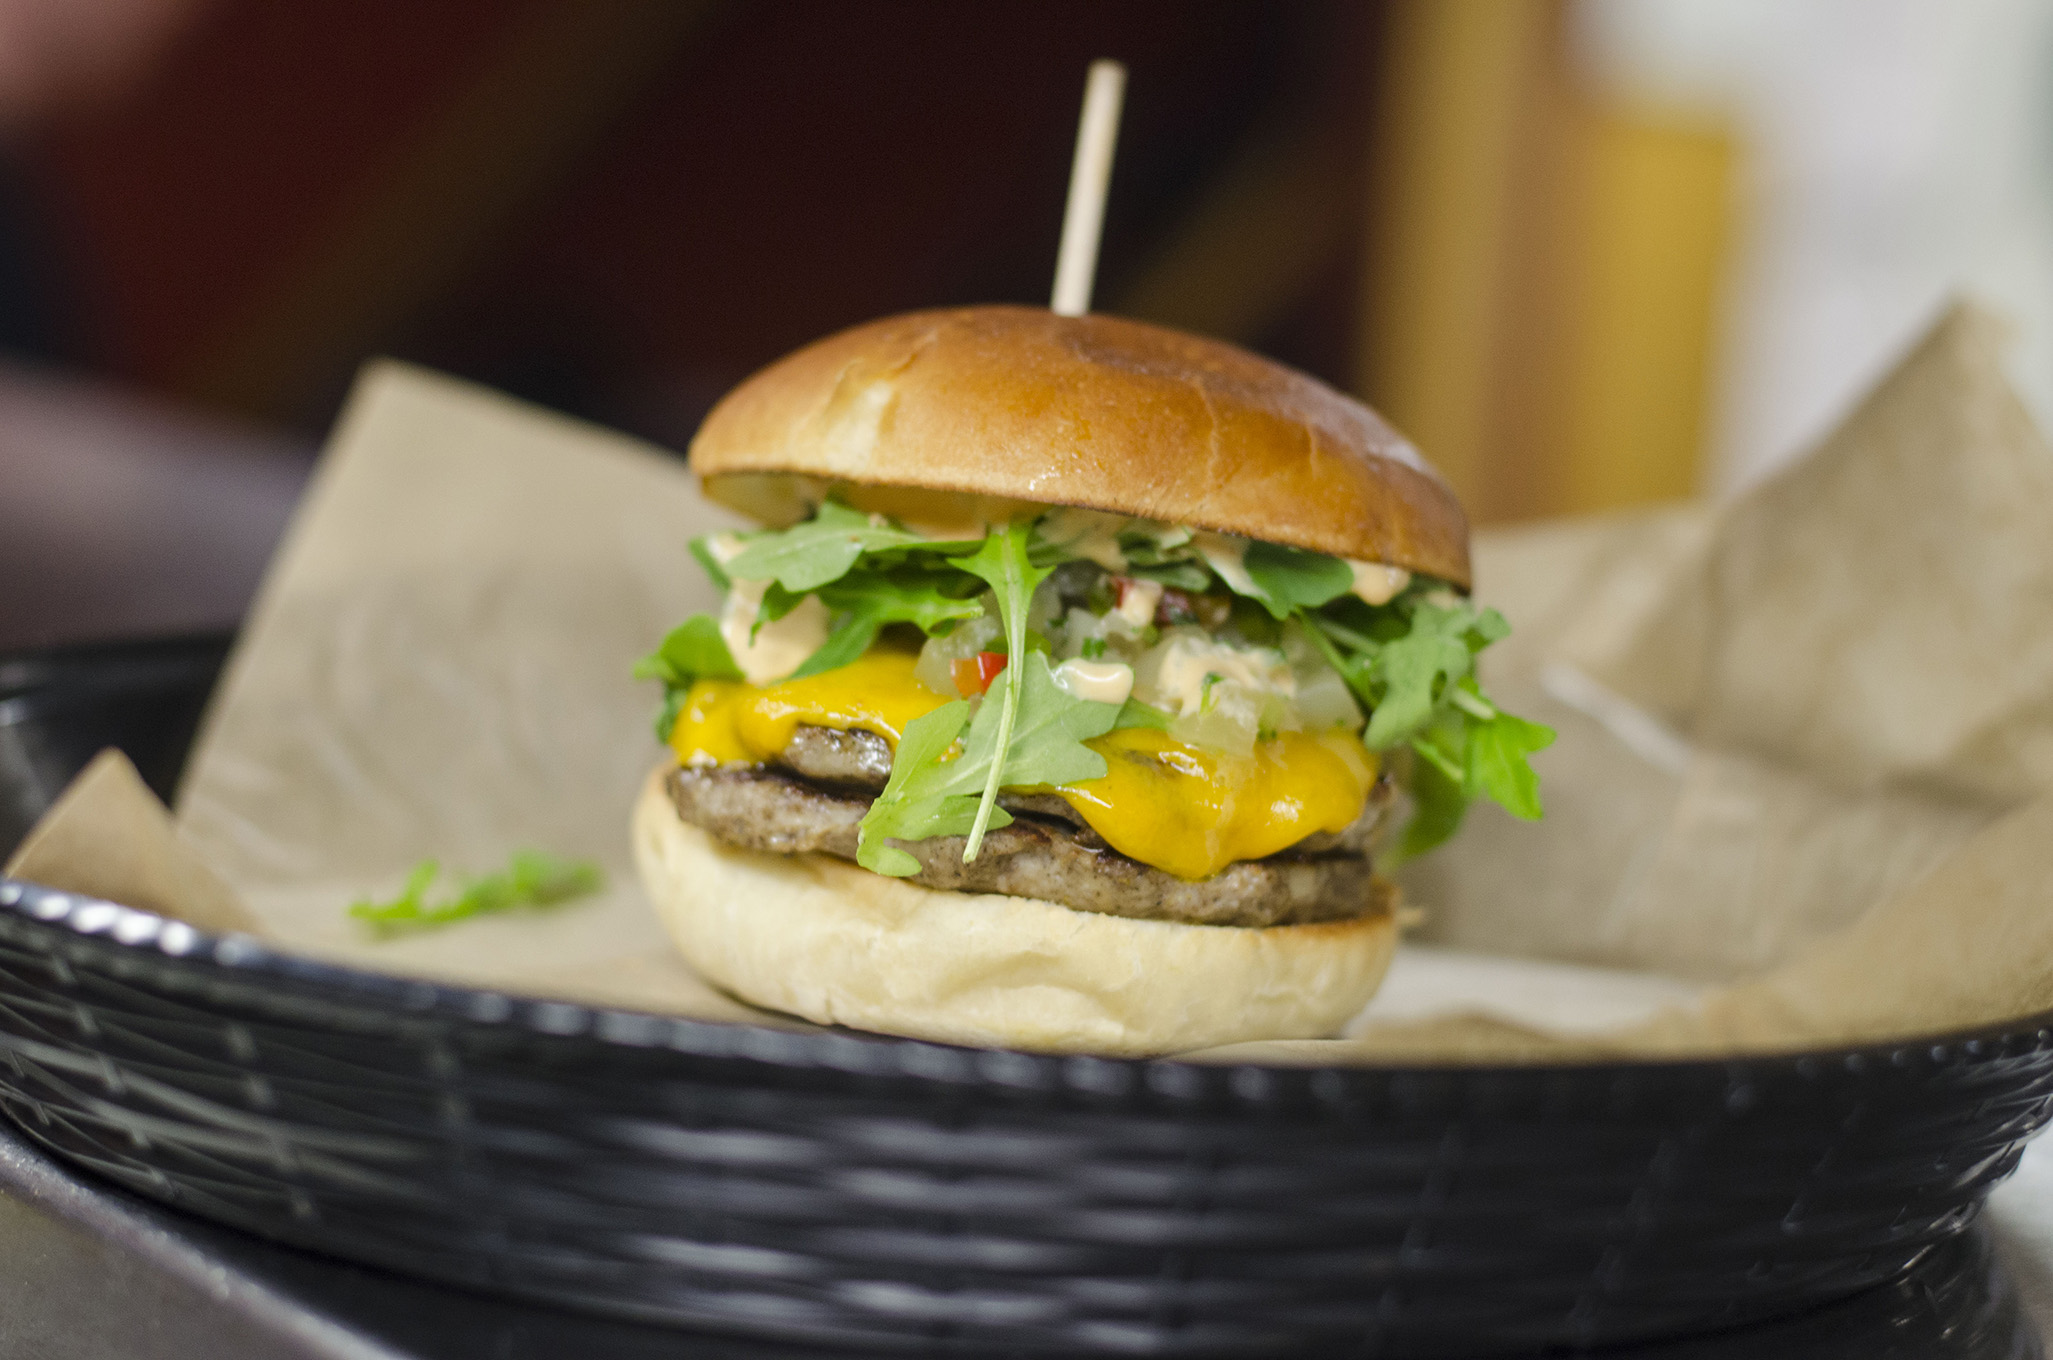 The Jerk Turkey burger from Mamo Burger in Windsor, Ontario.